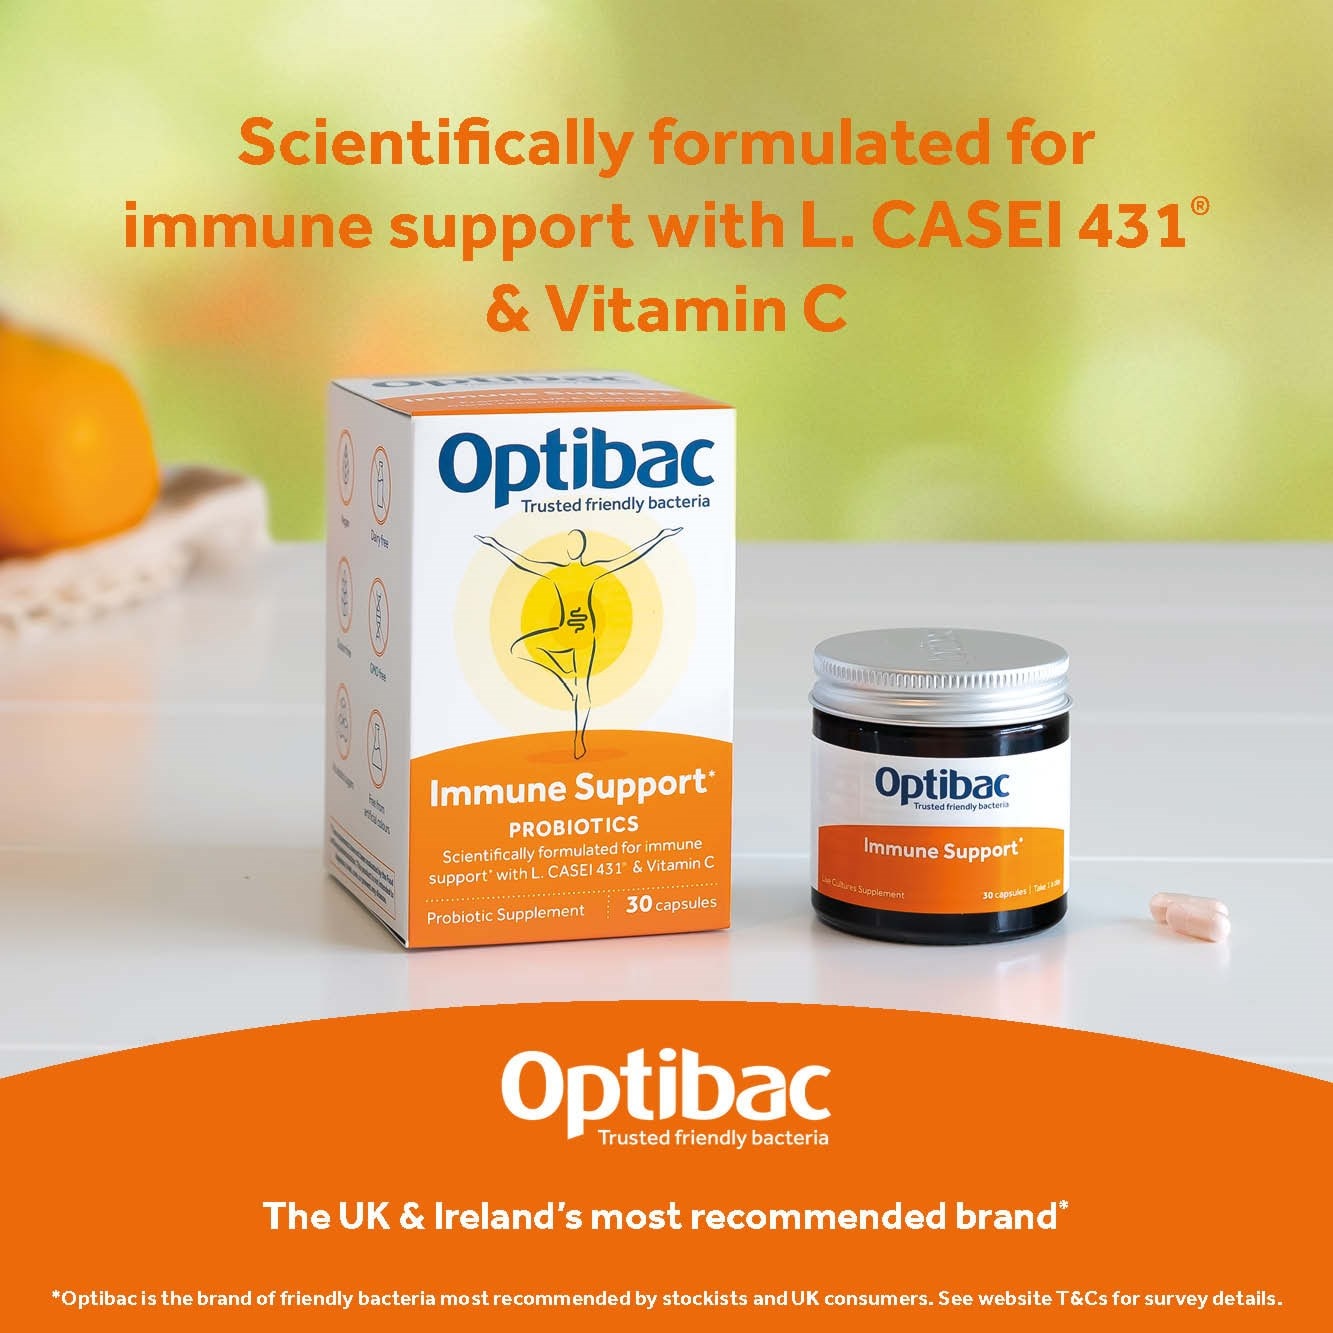 Optibac Probiotics Immune Support supports immunity